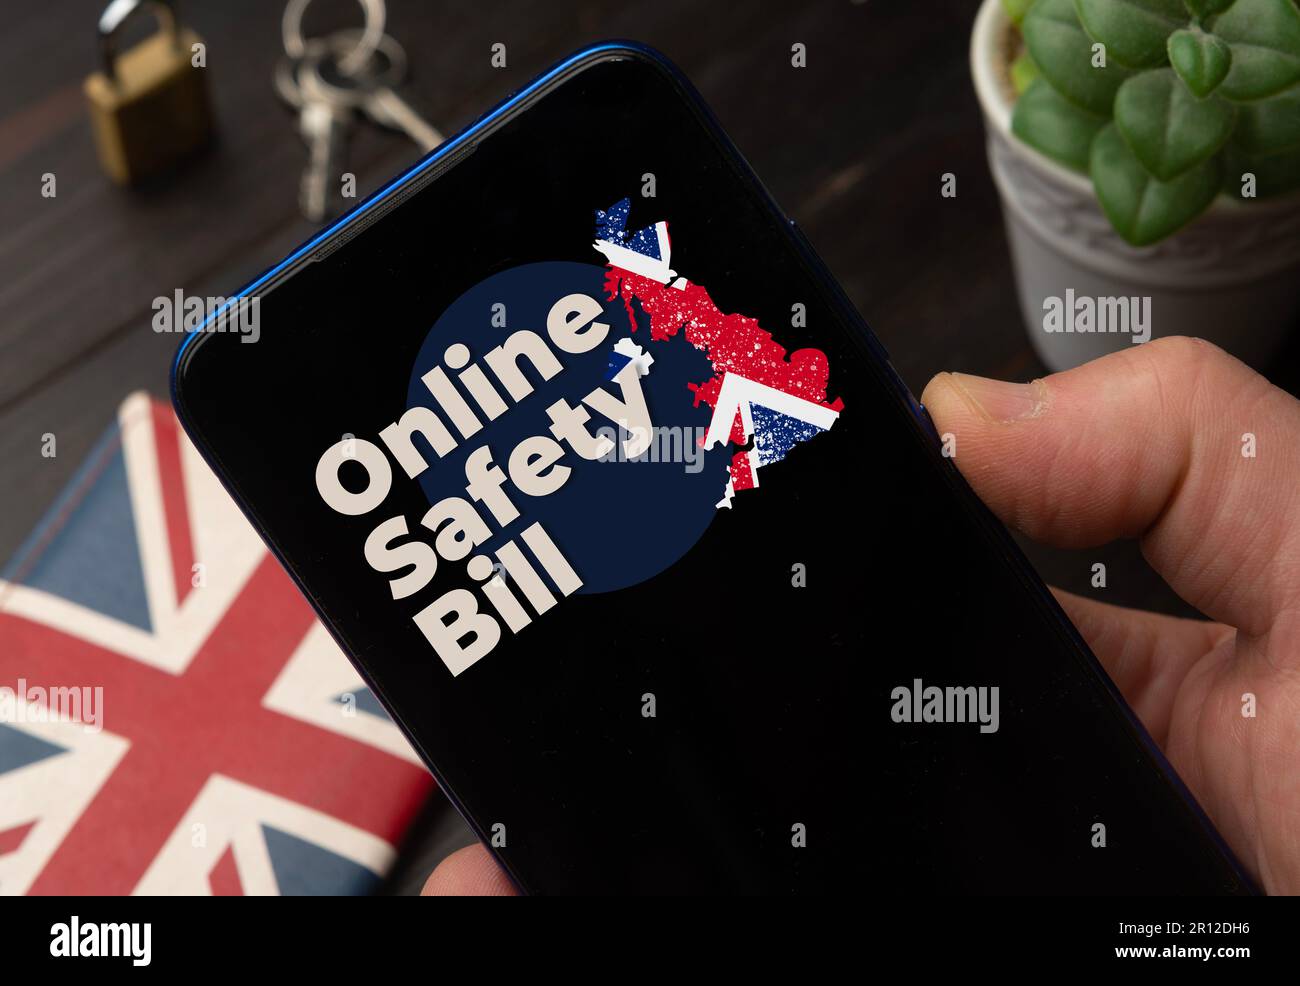 Online Safety Bill (OSB) UK concept: man hold a smartphone over a wooden desktop Stock Photo